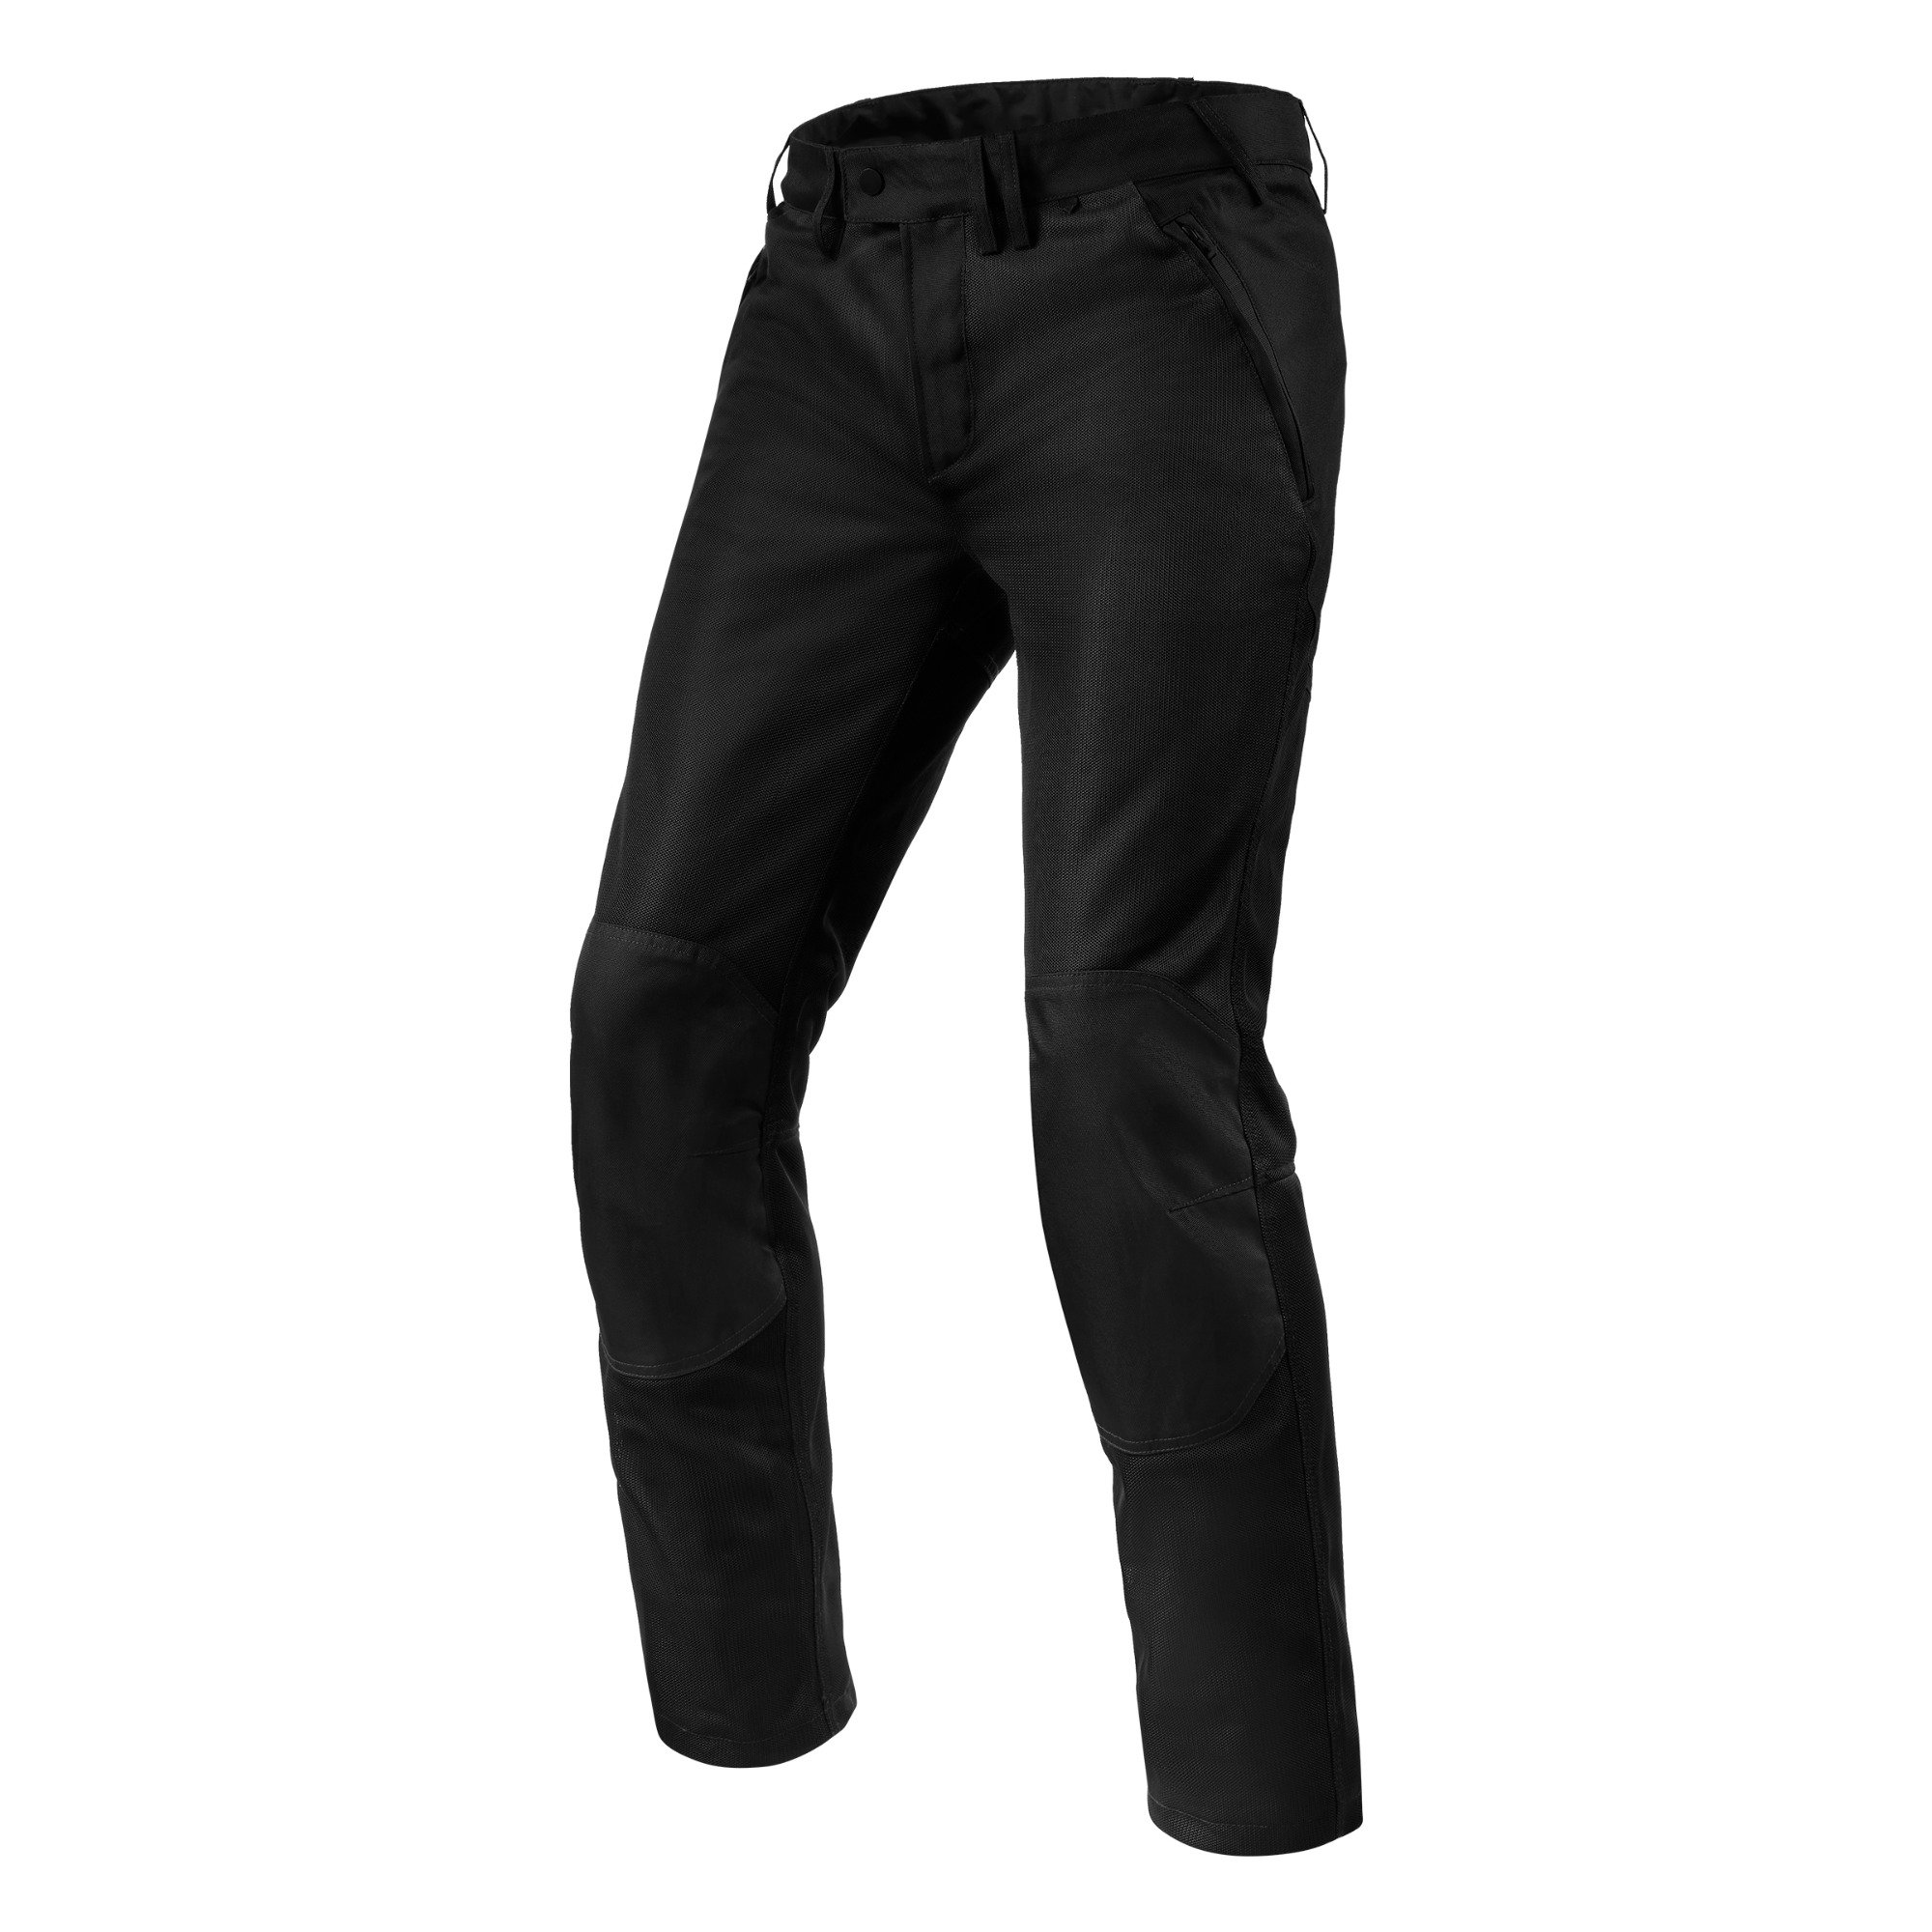 Image of REV'IT! Pants Eclipse 2 Black Long Motorcycle Pants Size M EN